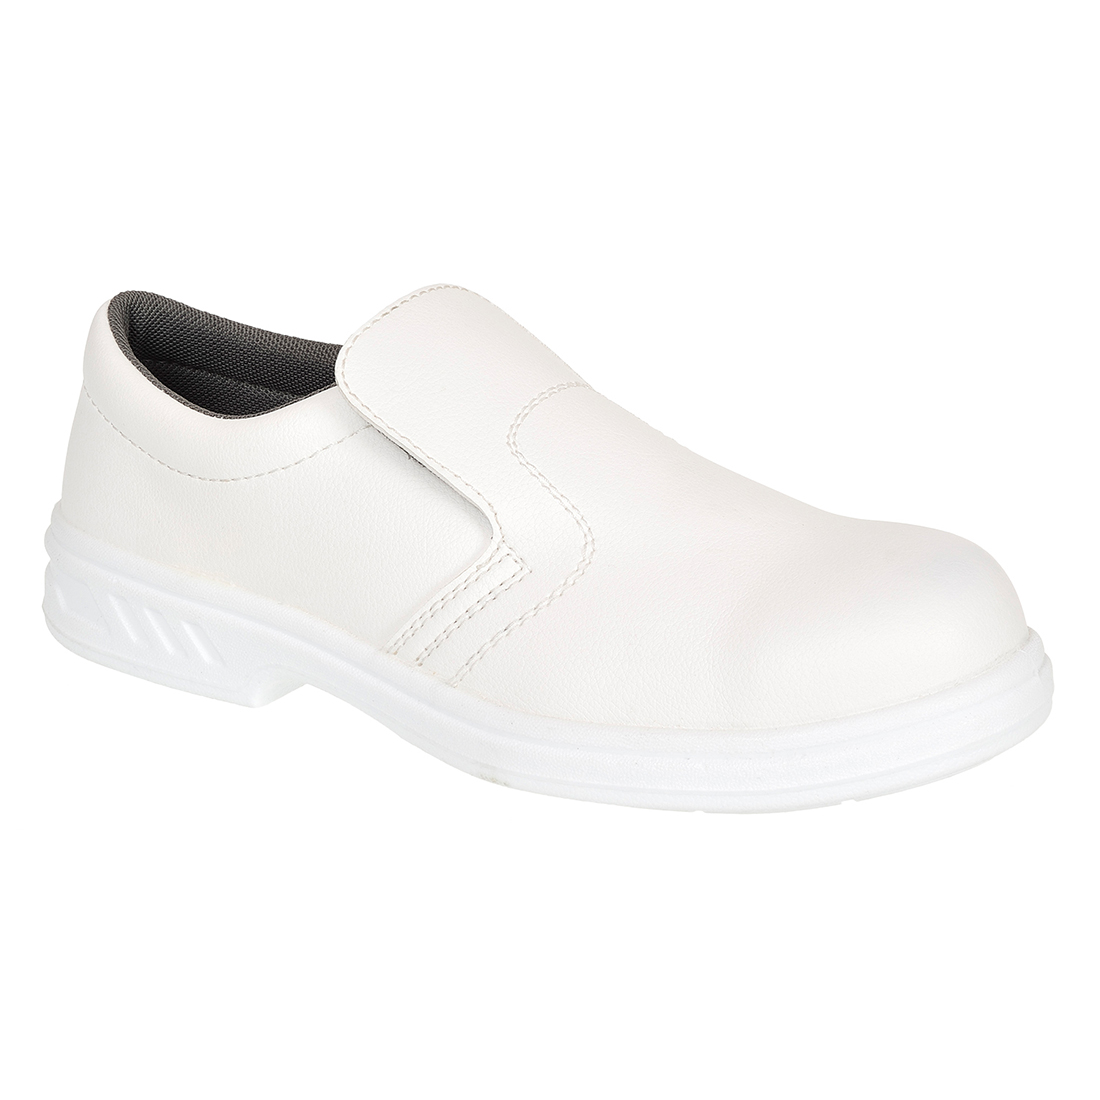 Occupational Slip On Shoe O2 - White